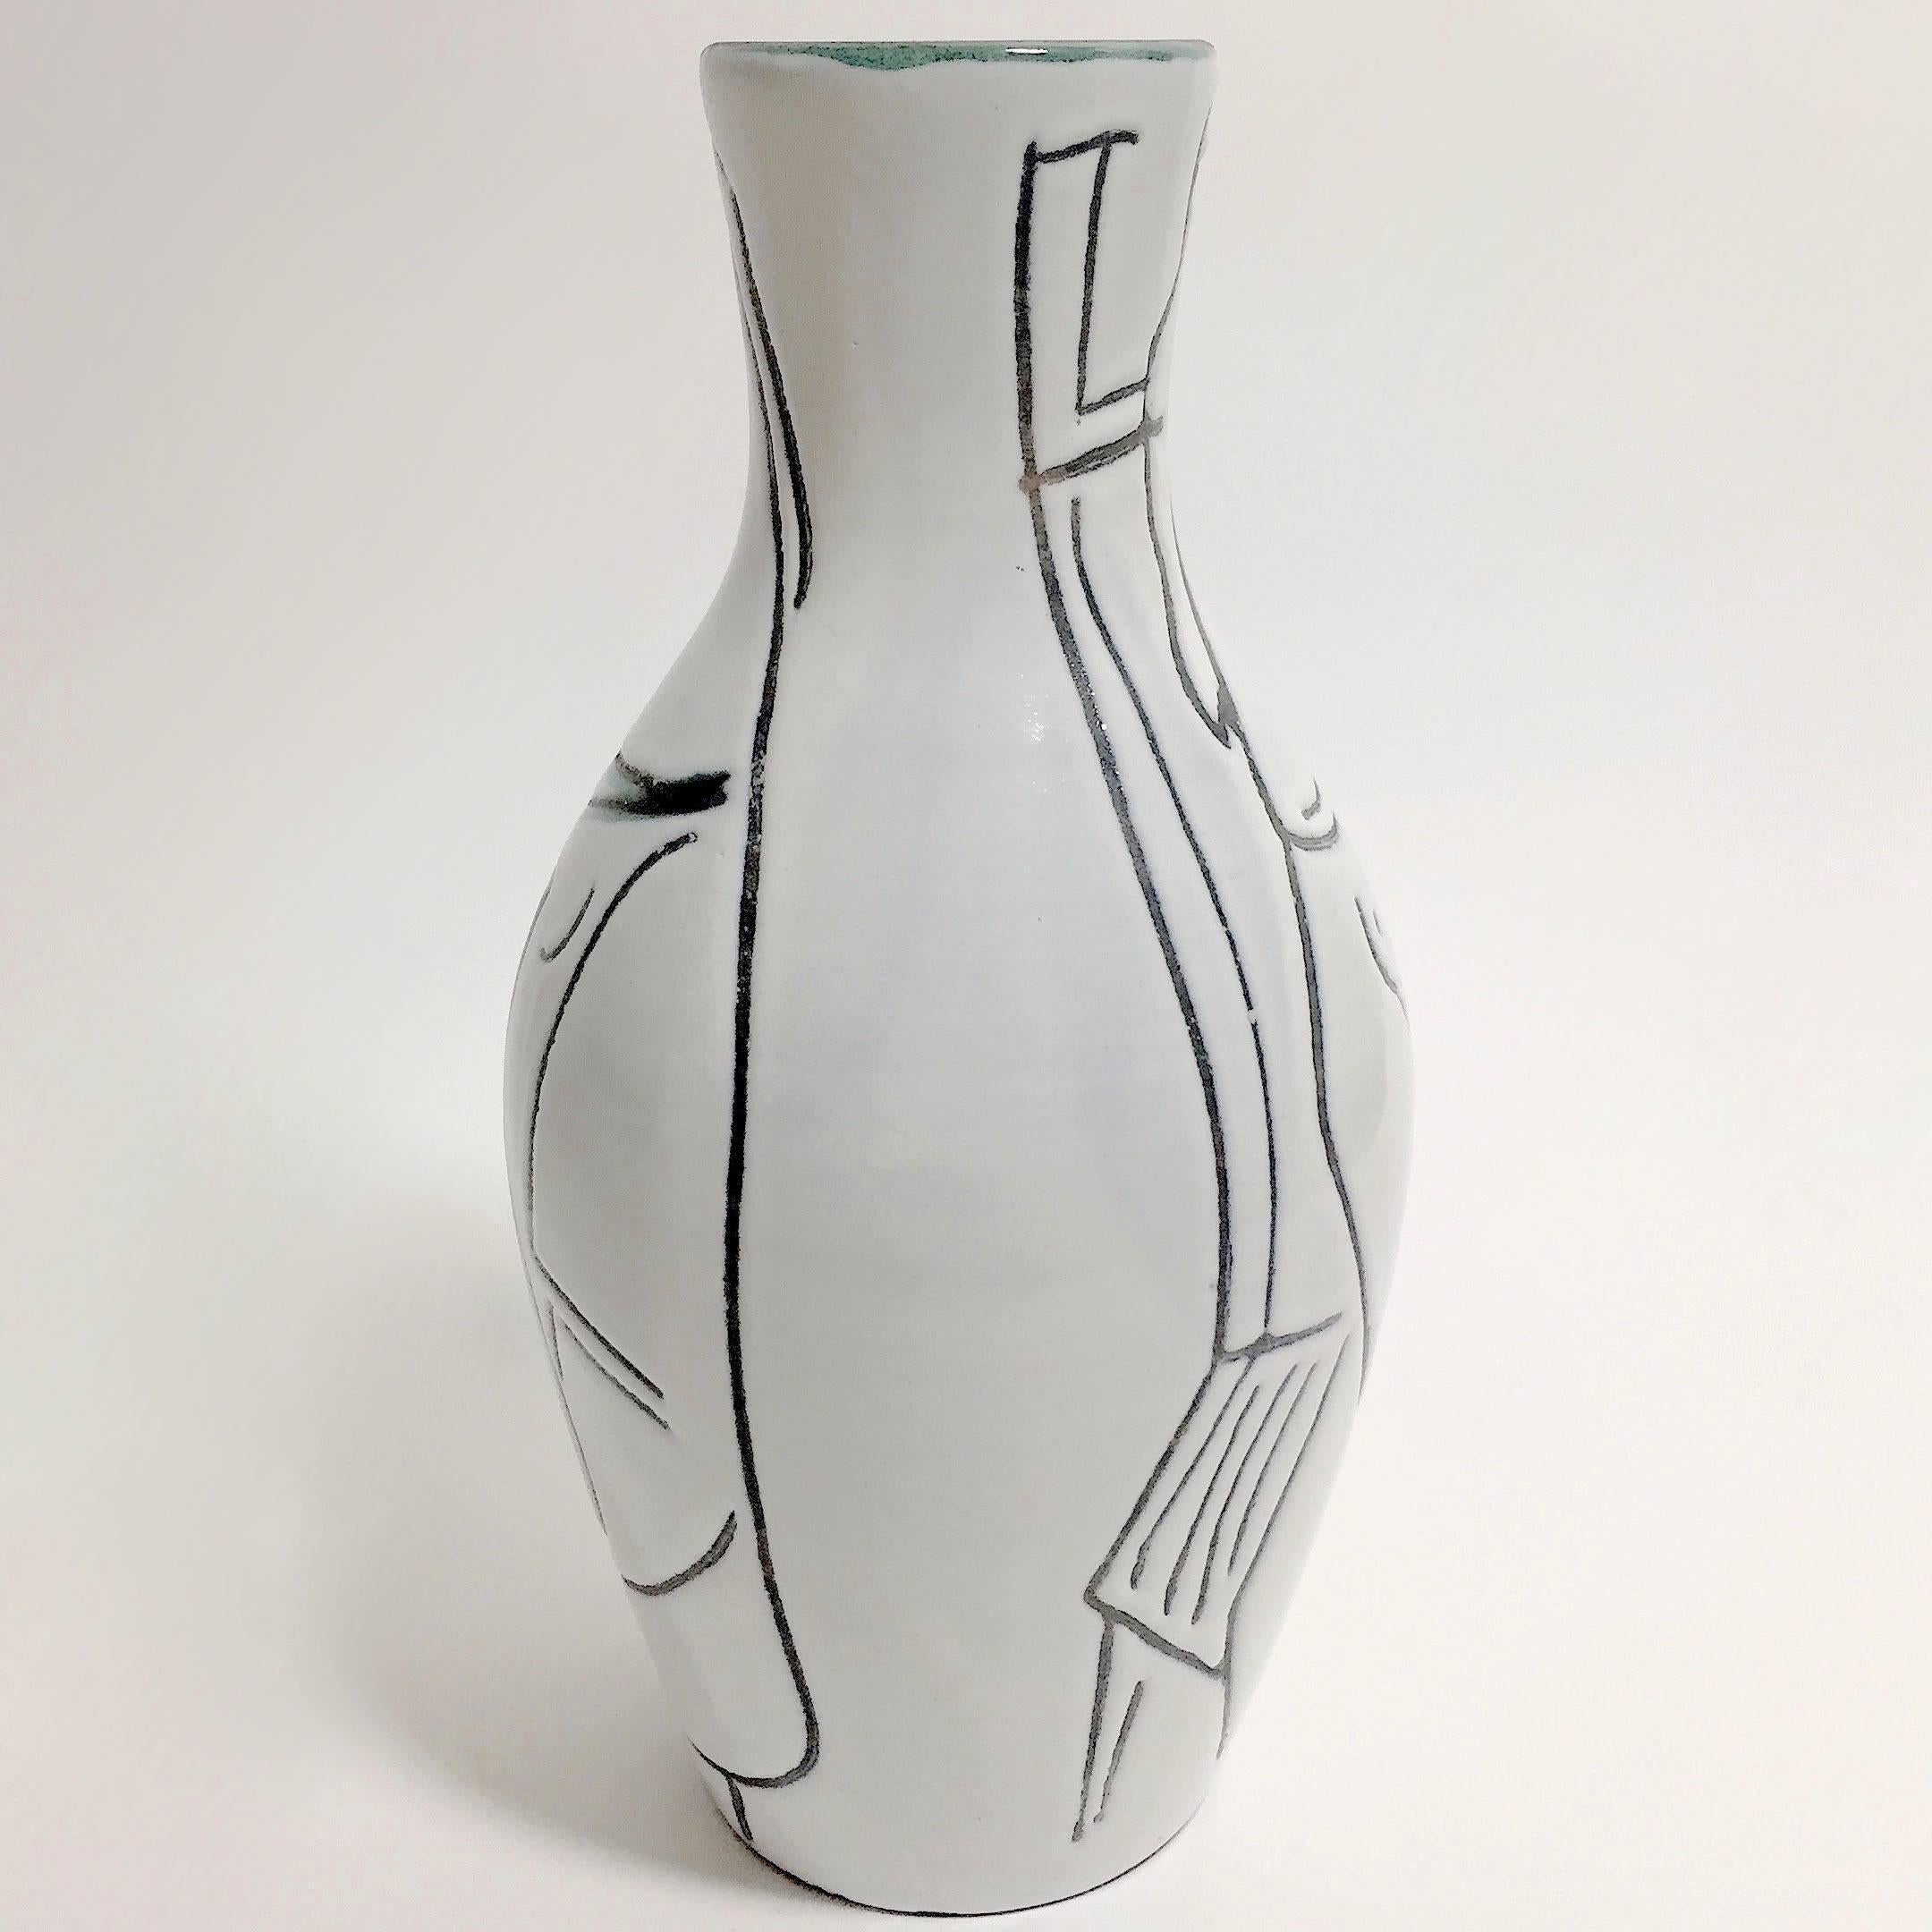 Enameled Jacques Innocenti, Black and White Ceramic Bottle Vase For Sale